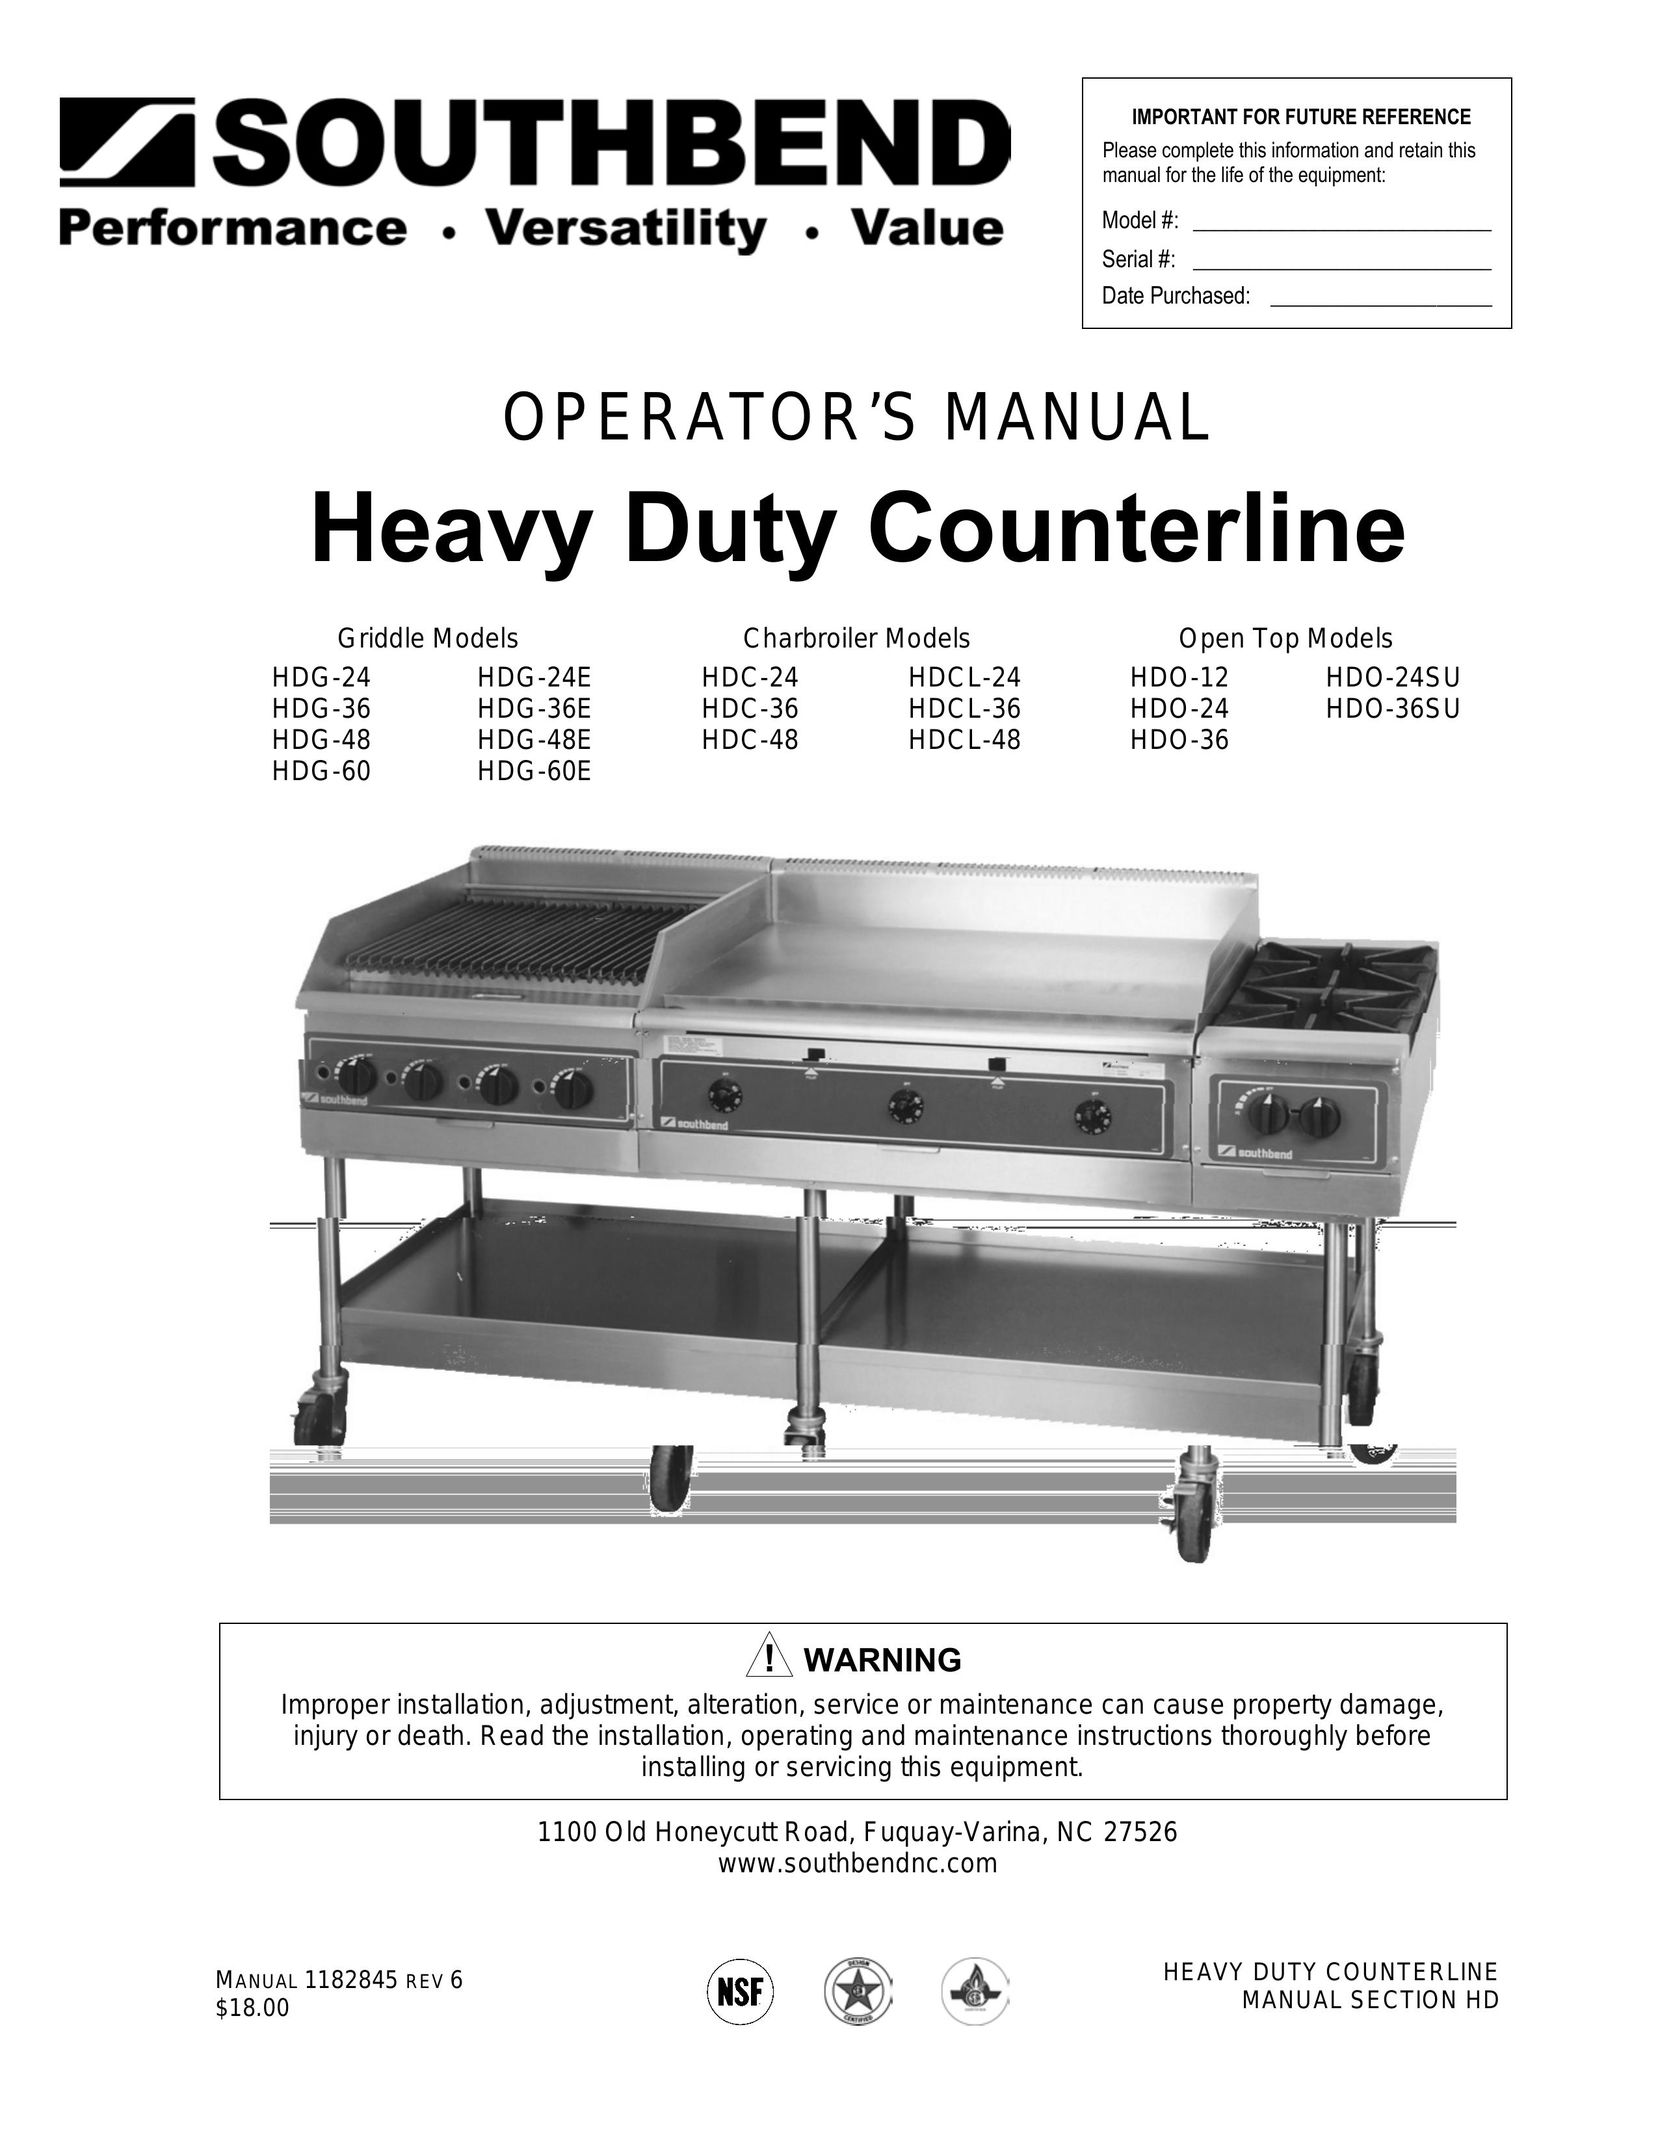 Southbend HDO-24SU Cooktop User Manual